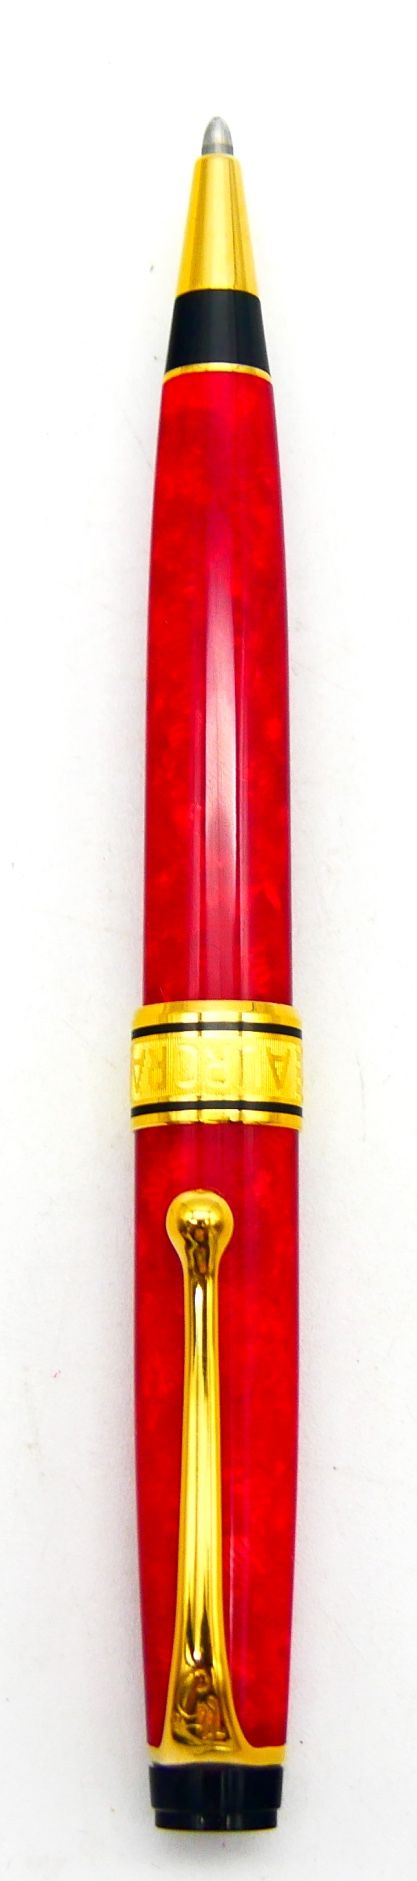 Null 傲罗拉

Optima 75周年纪念

仿红色珍珠母树脂和镀金金属的Biros，上面刻有奥罗拉的希腊门楣。

编号为1410

长：13.5厘米，5.&hellip;